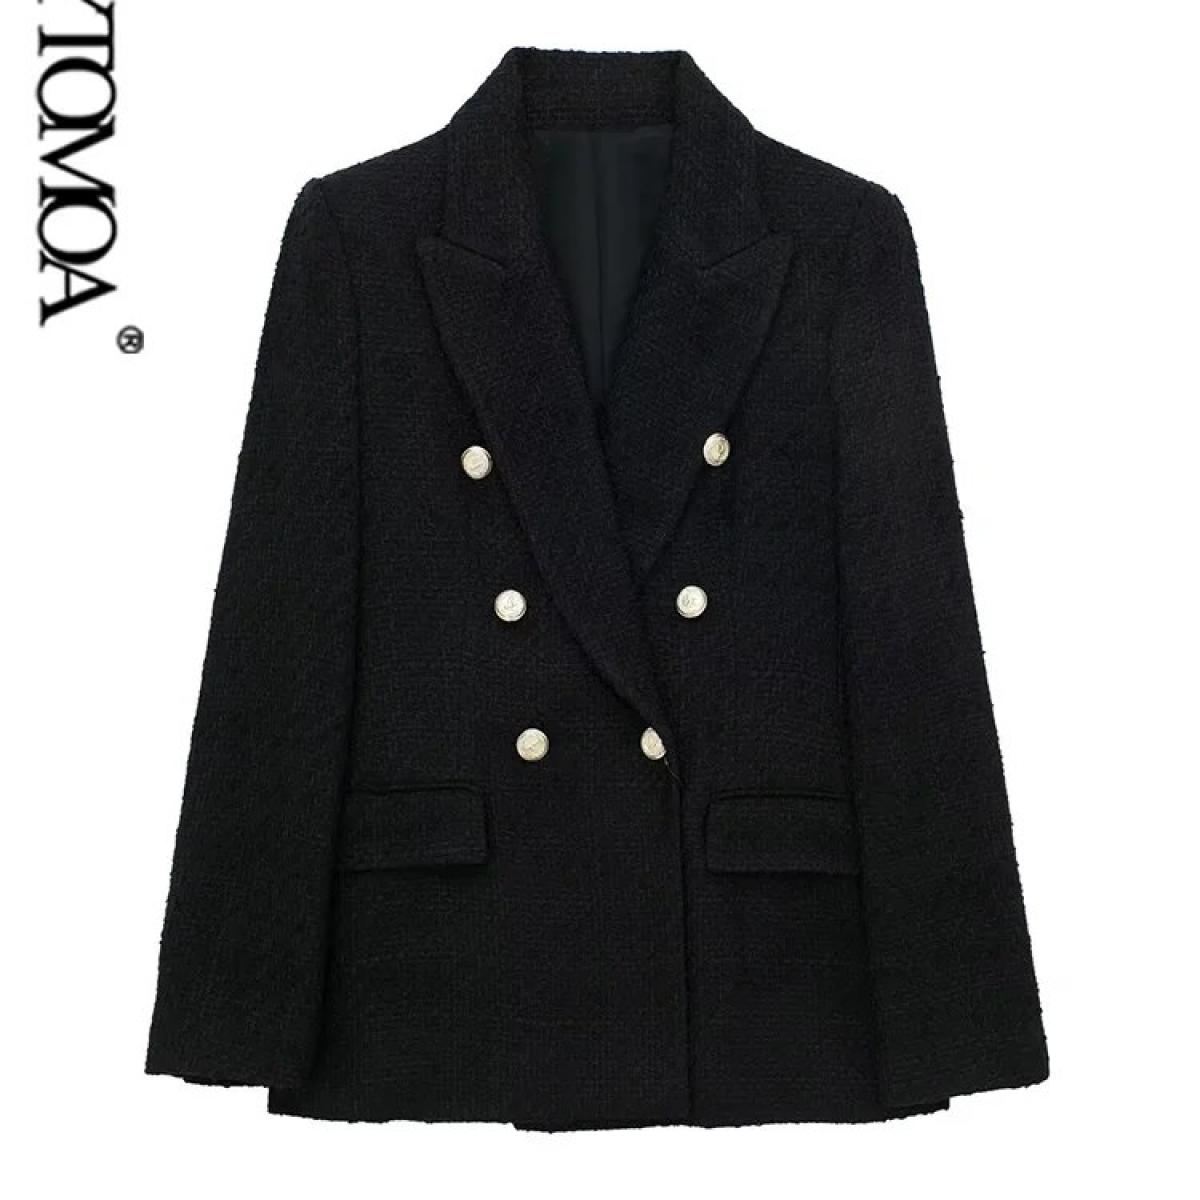 Kpytomoa moda feminina tweed duplo breasted blazer casaco vintage mangas compridas bolsos com aba outerwear feminino chiques top